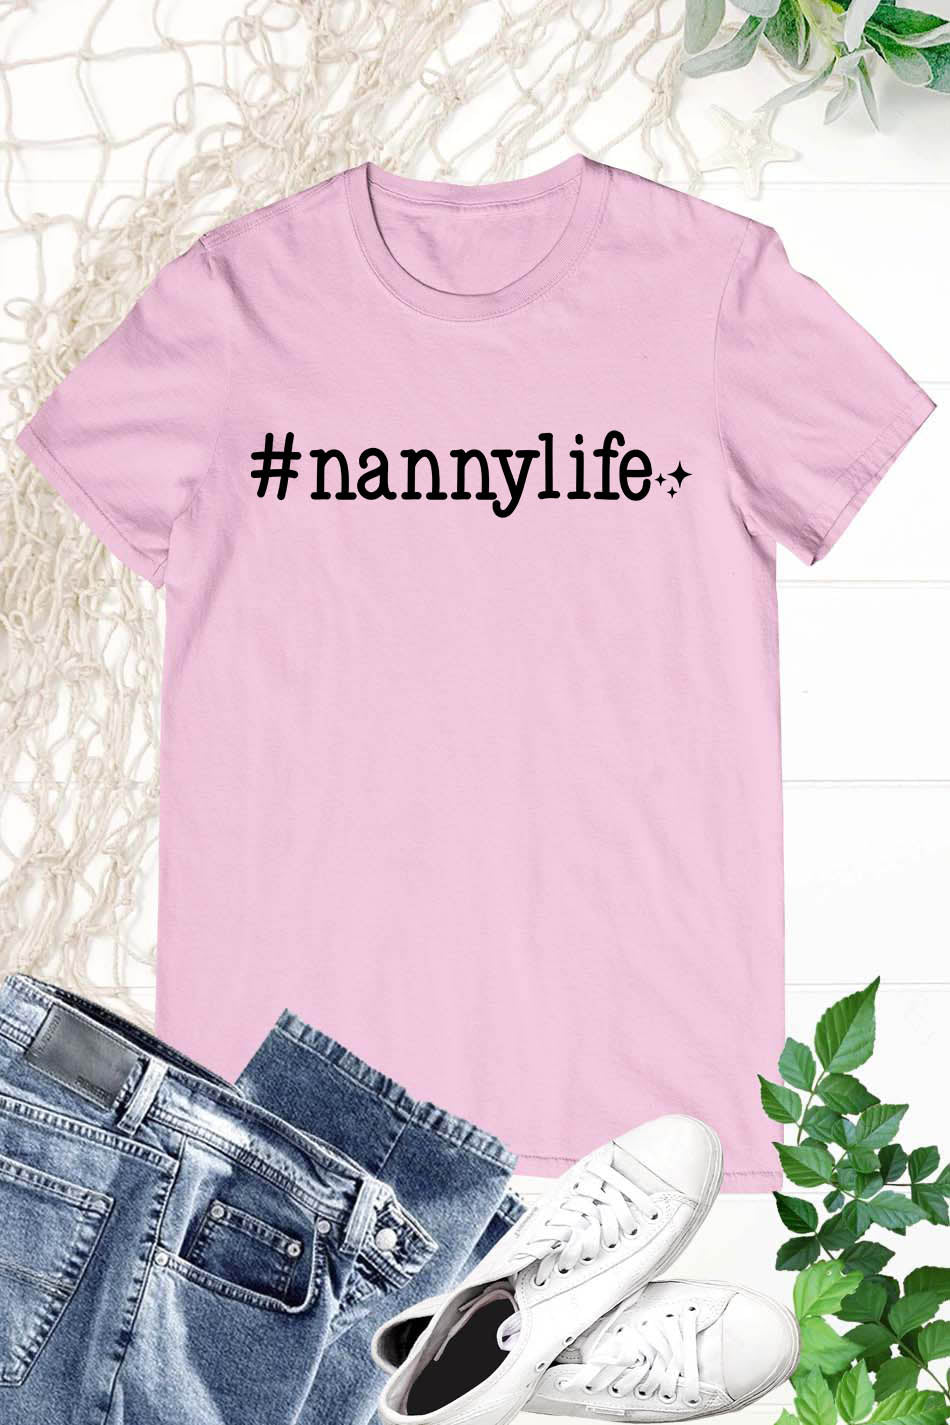 NannyLife Nanny Nana Shirt